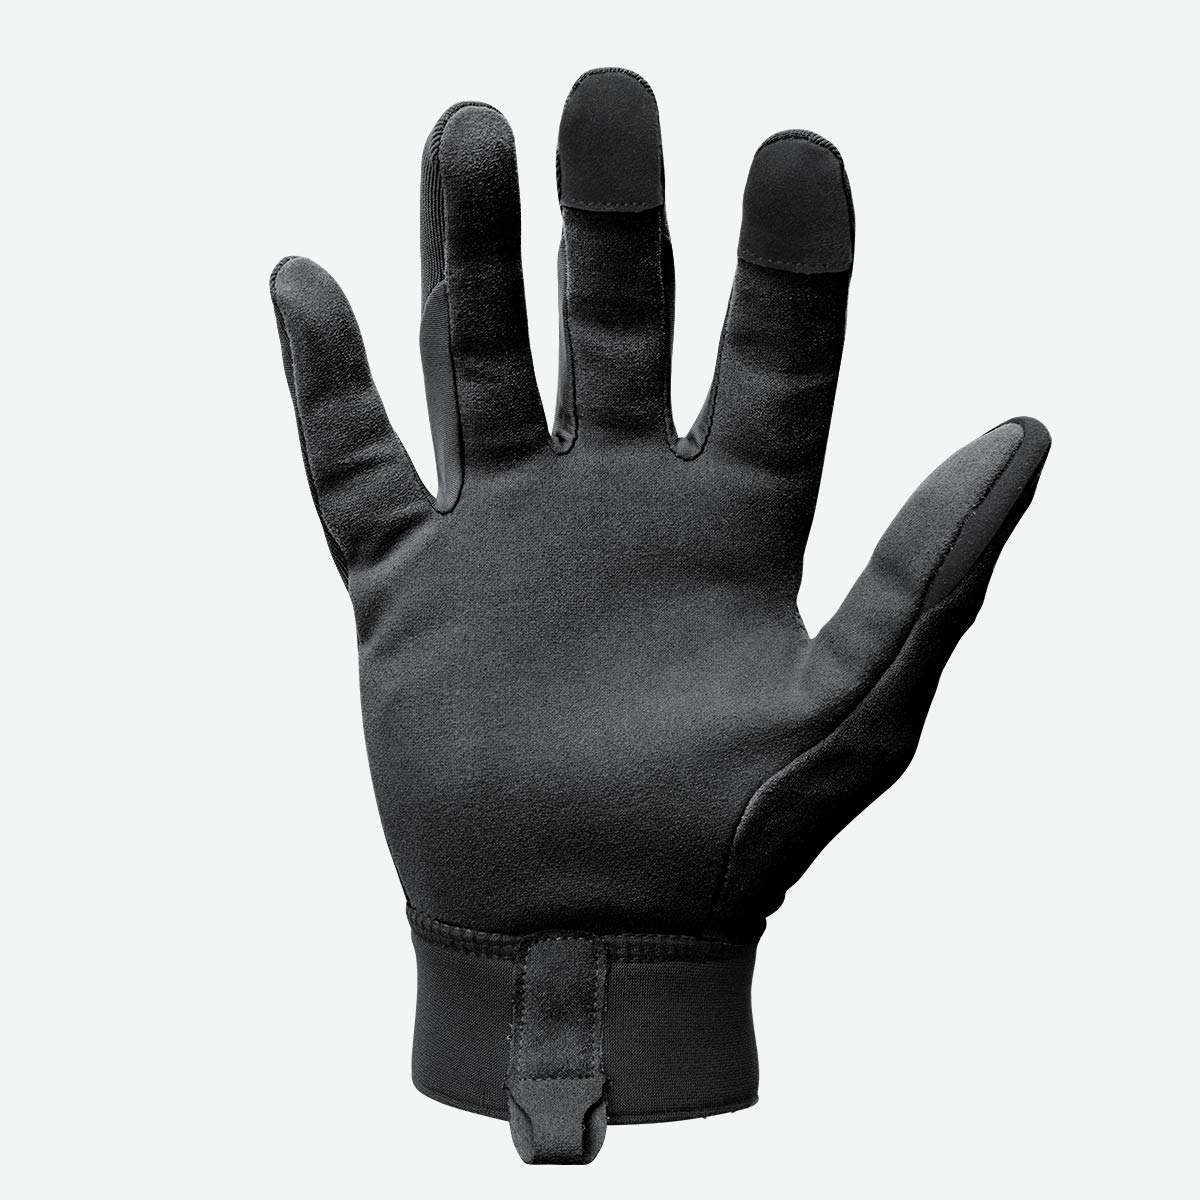 Magpul Technical Glove Lightweight Work Gloves